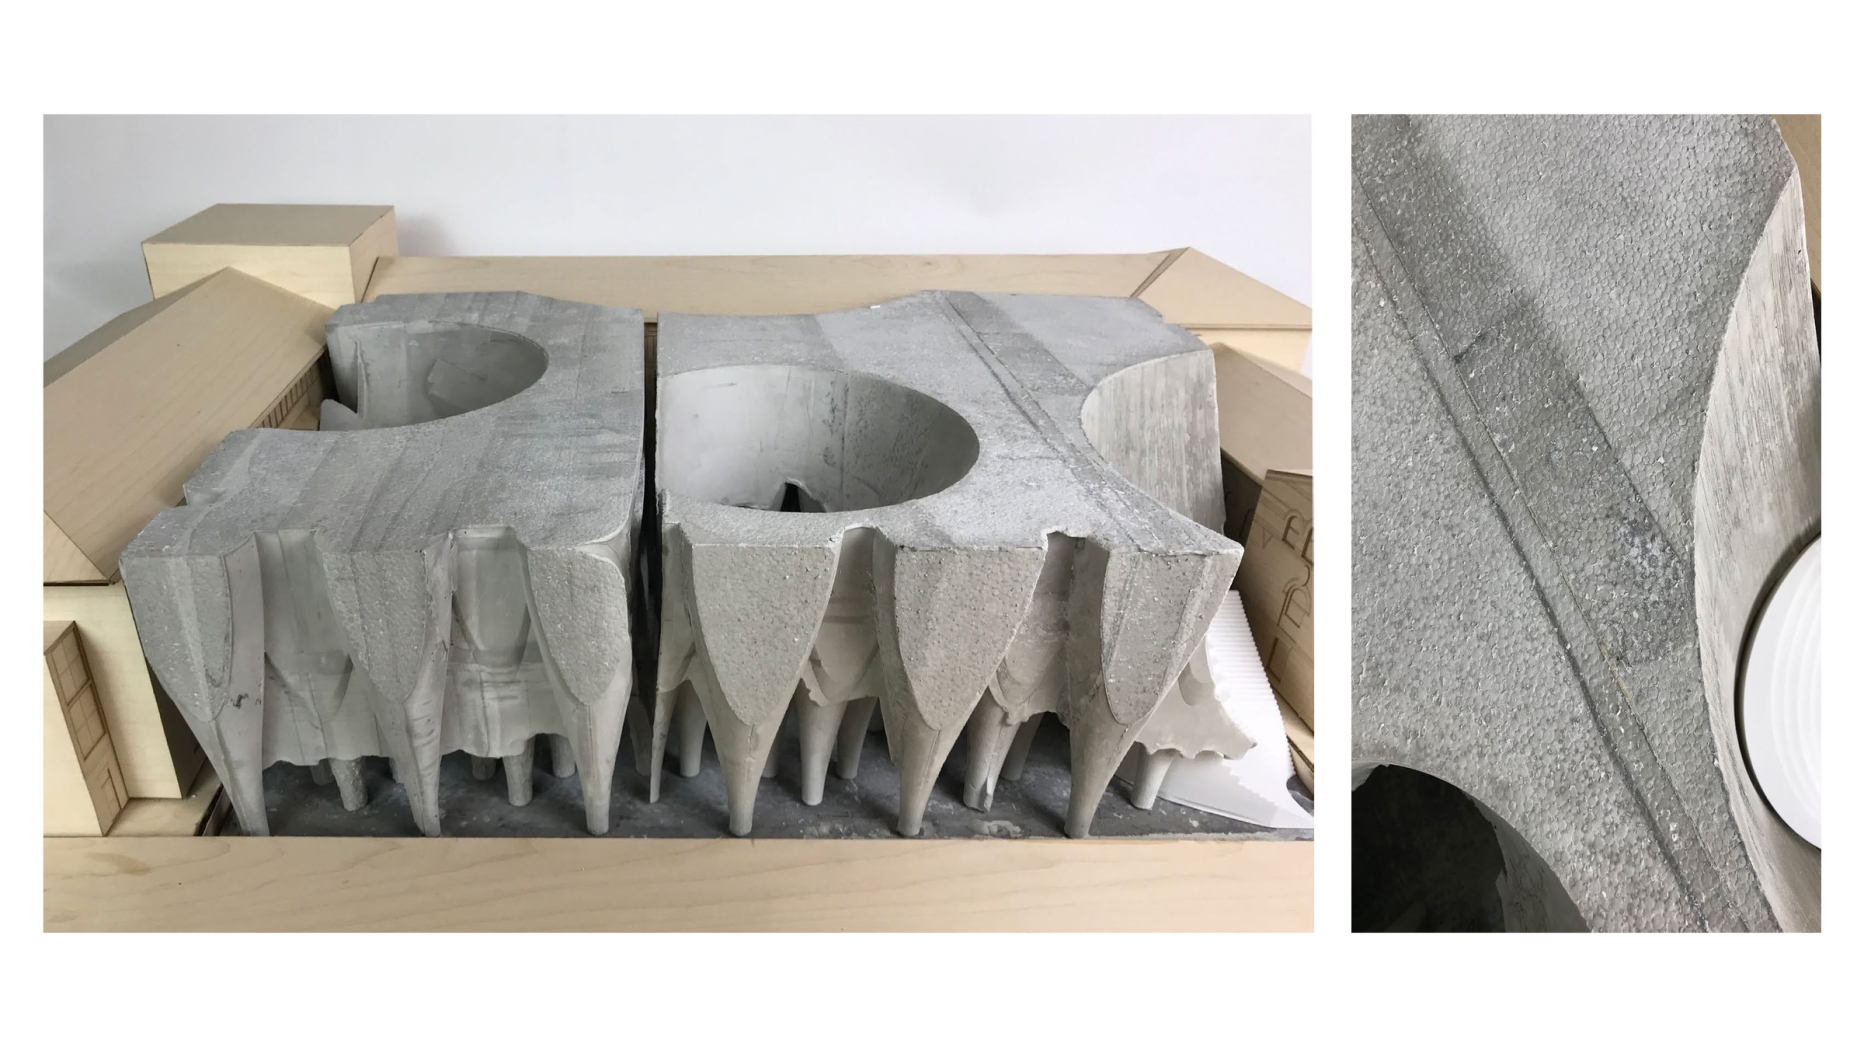 Model of same building cast in concrete